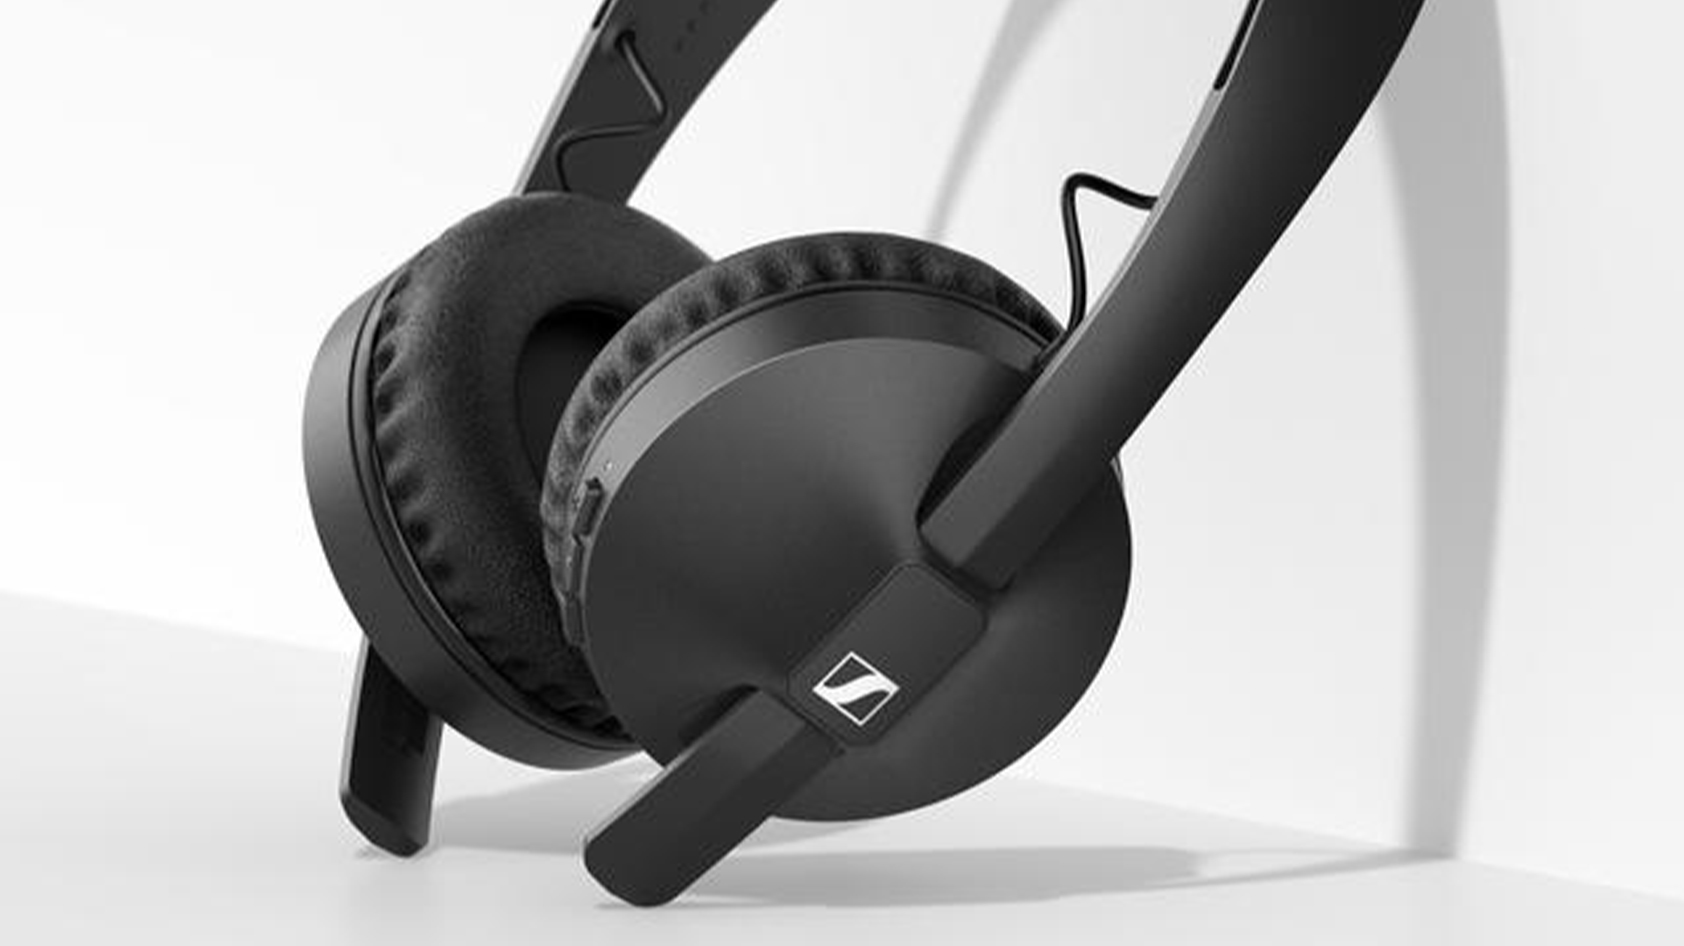 The Sennheiser HD 250BT on-ear wireless headphones in black rest against a white surface.